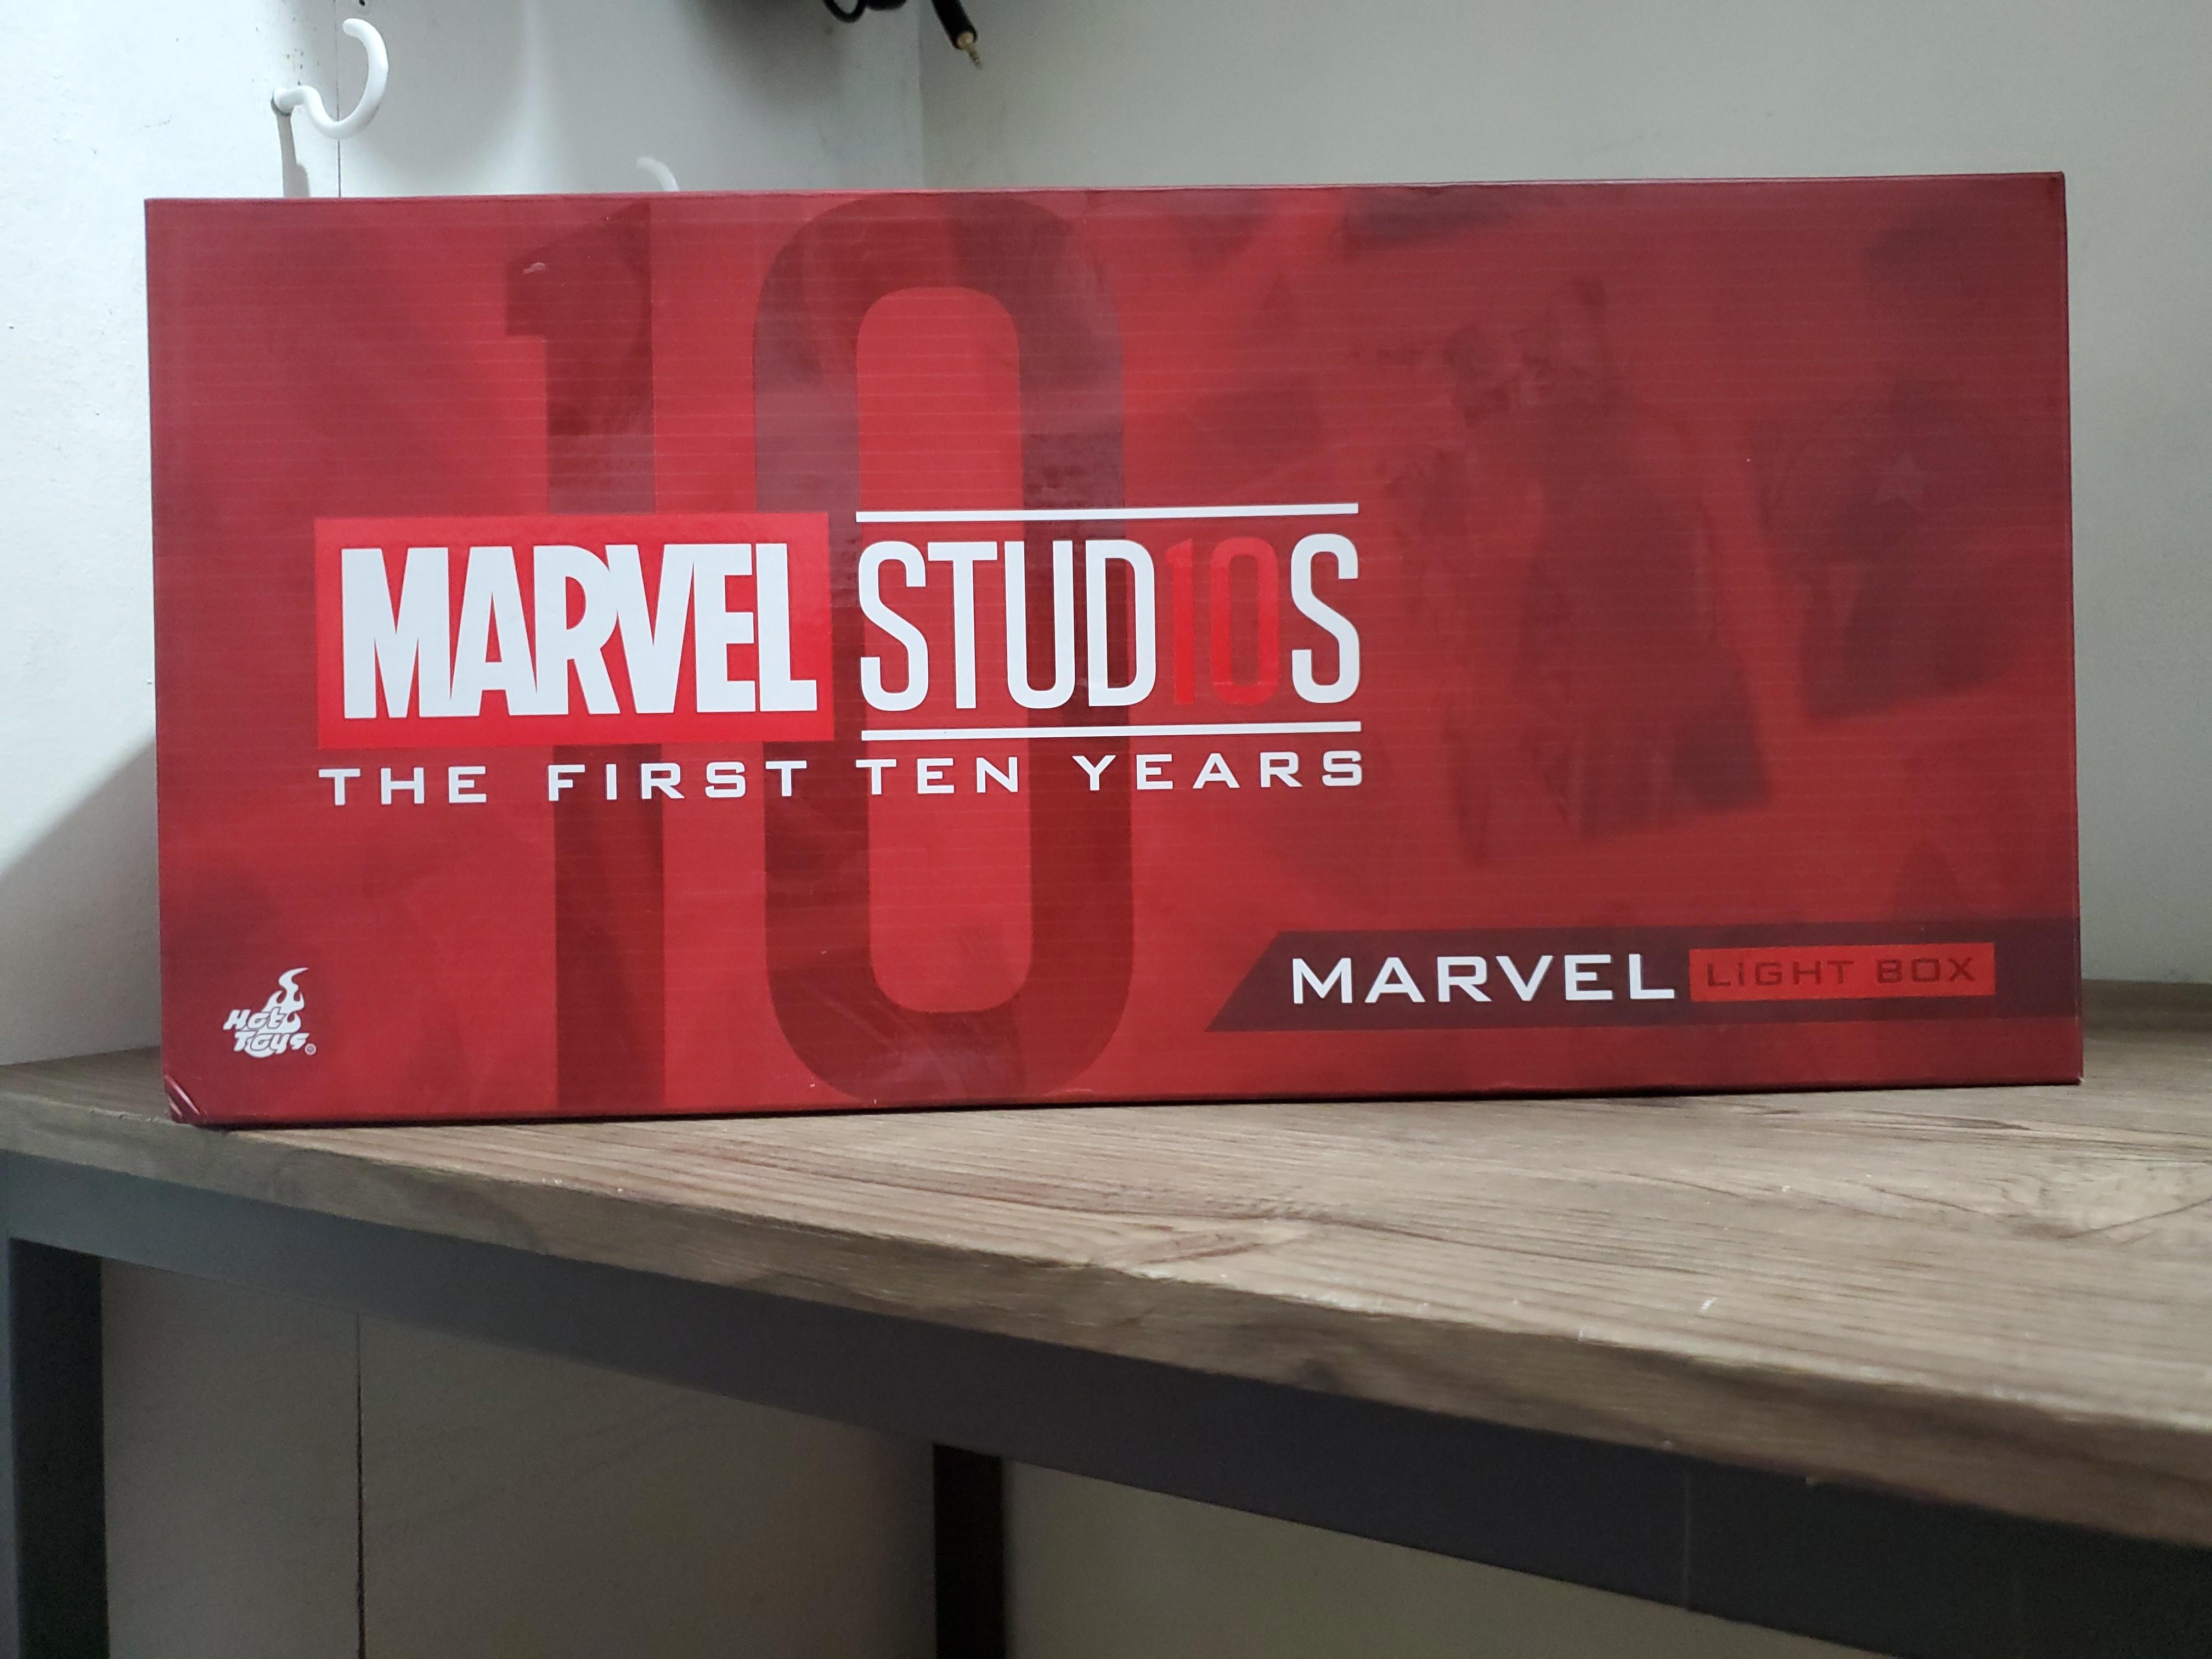 Hot Toys MARVEL STUDIOS THE FIRST TEN YEARS "MARVEL" LIGHT BOX 